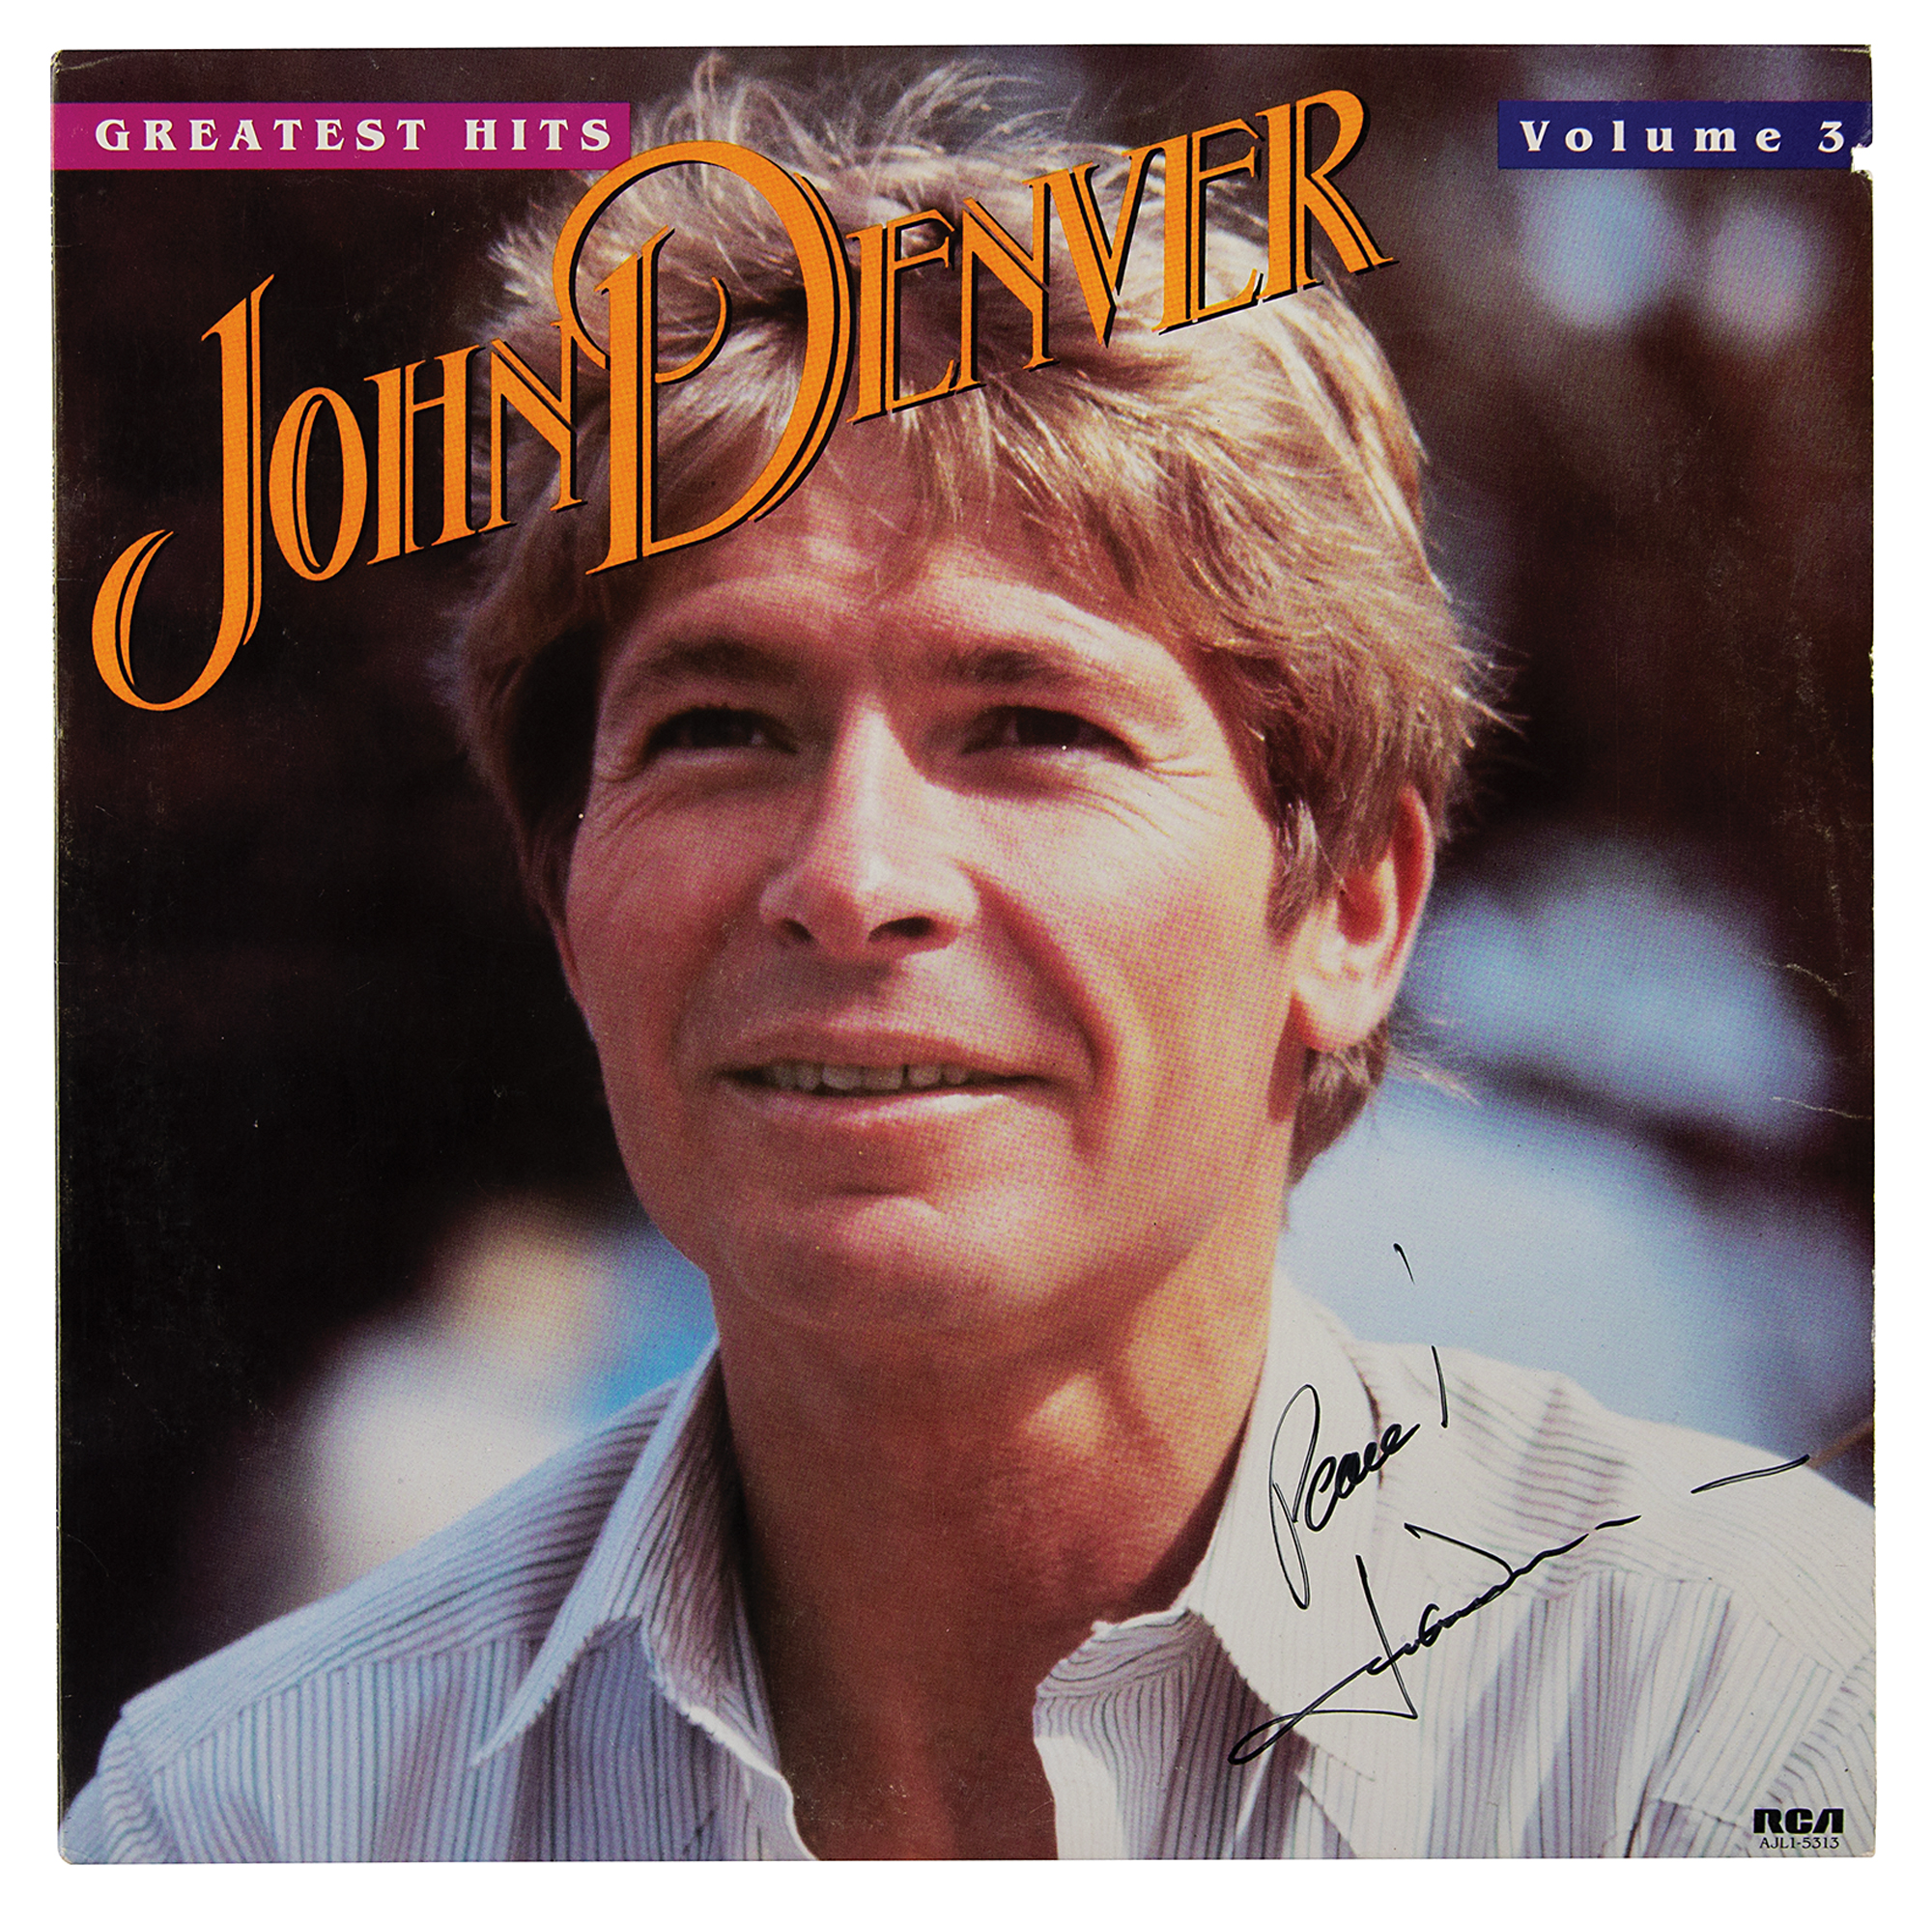 John Denver  Álbum de John Denver 